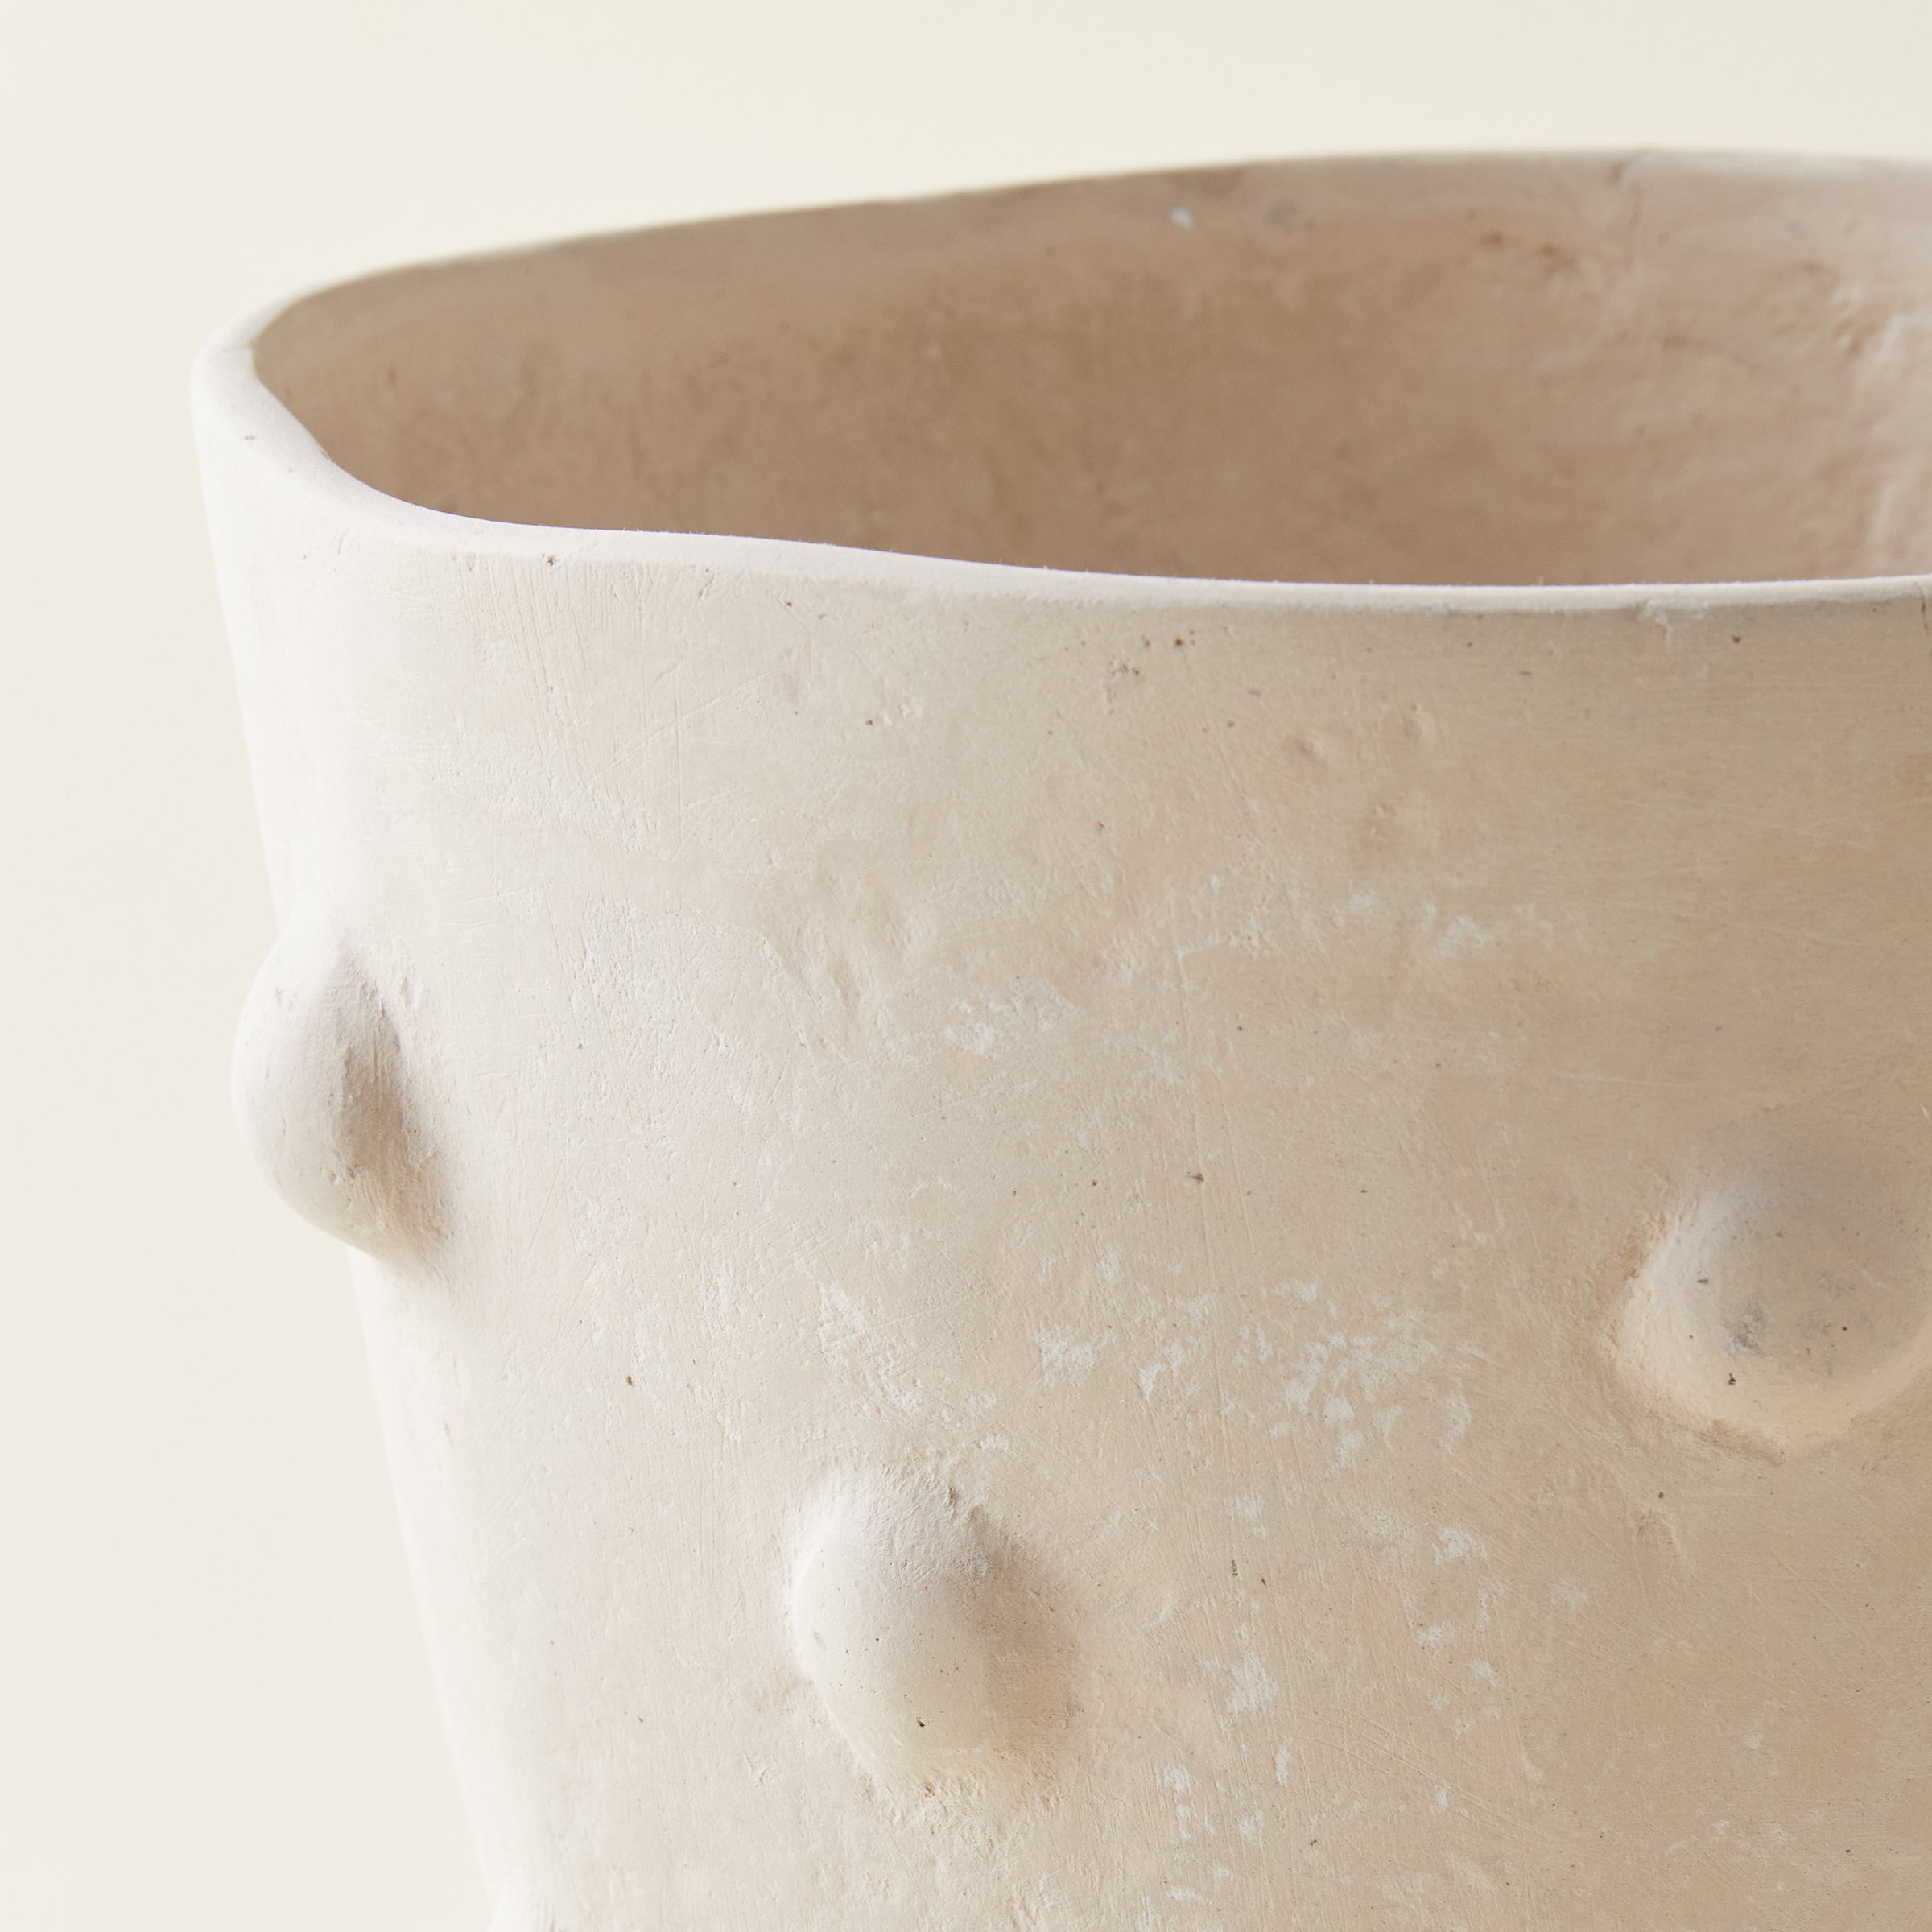 Dotted Paper Mache Vase